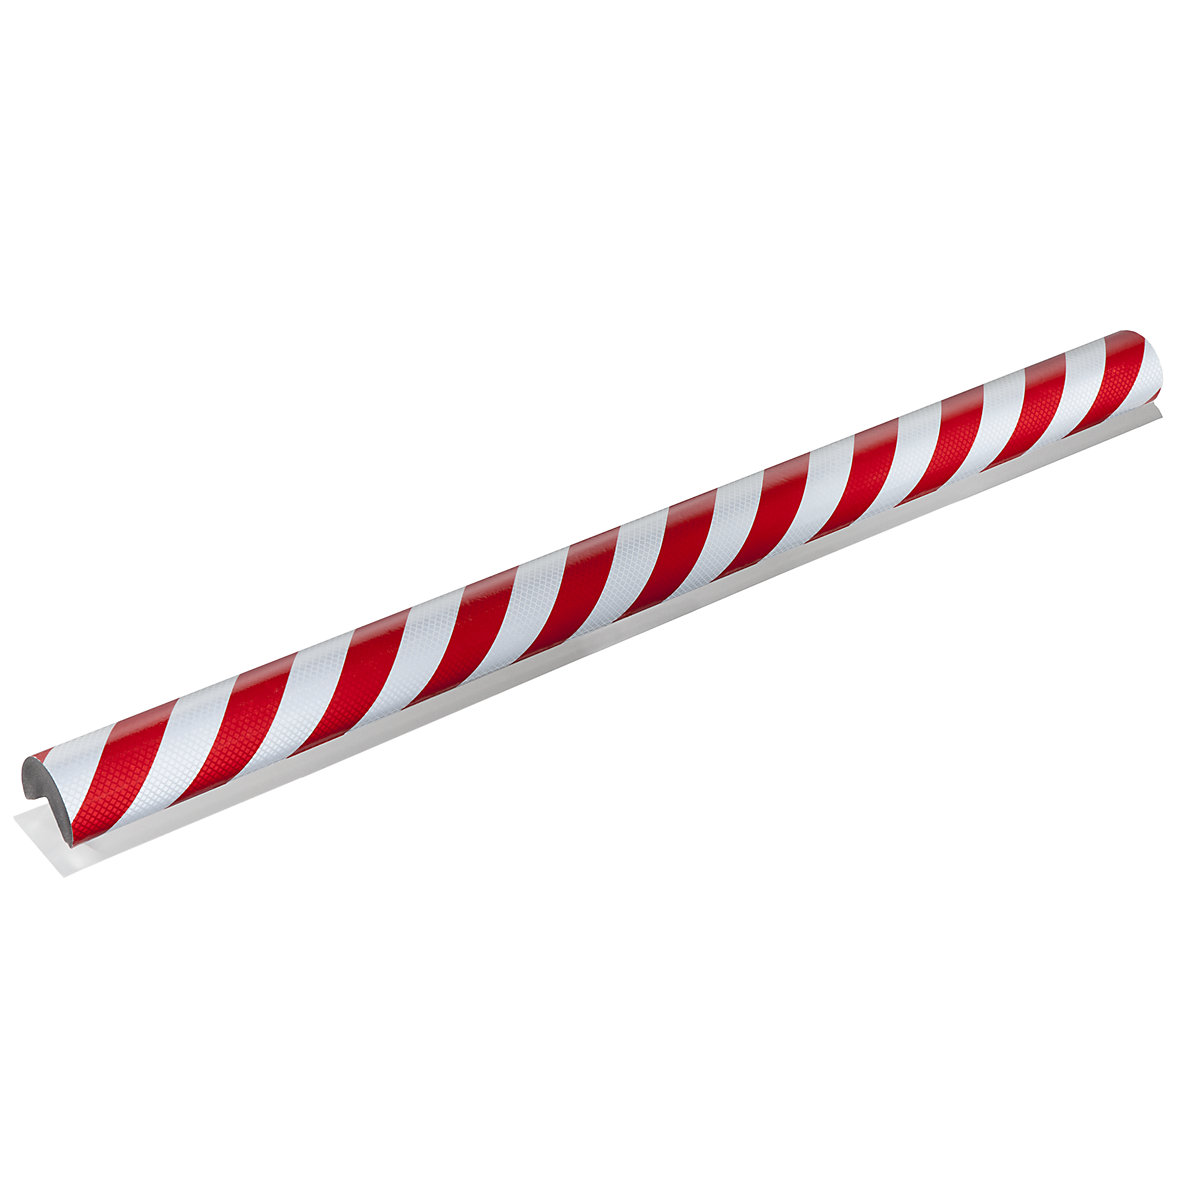 Paraspigoli Knuffi® – SHG, tipo A+, pezzo da 1 m, rosso / bianco rifrangente-11